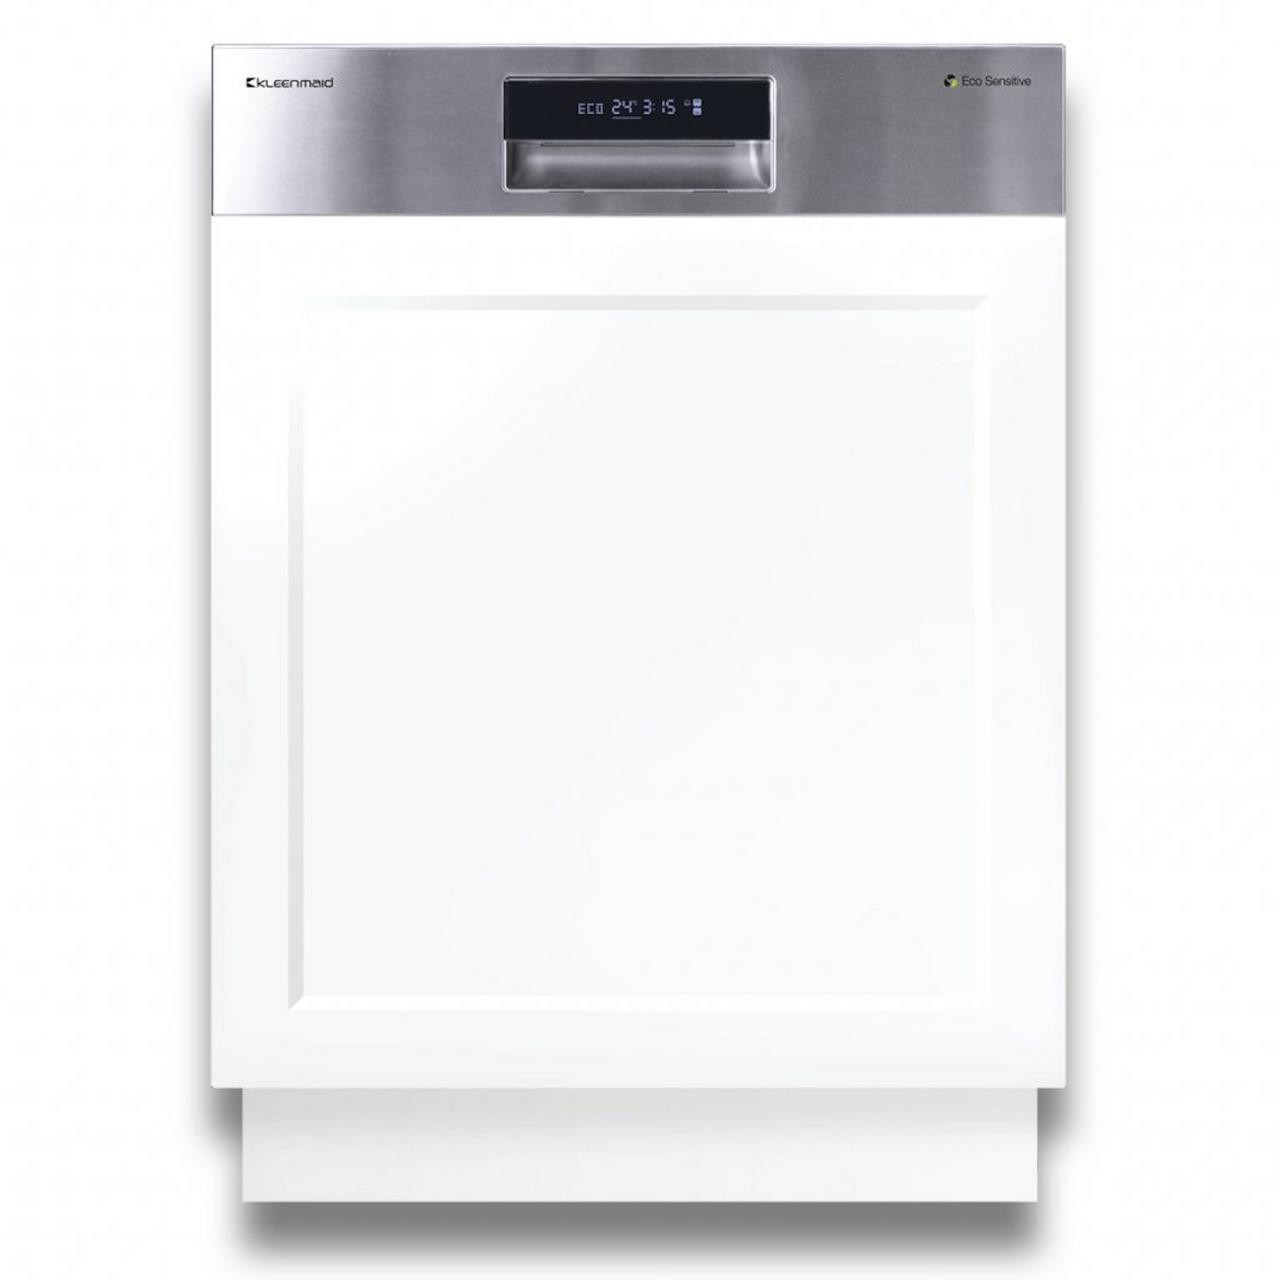 Kleenmaid Dishwasher 60cm Integrated 15 Place 8 Program DW6032